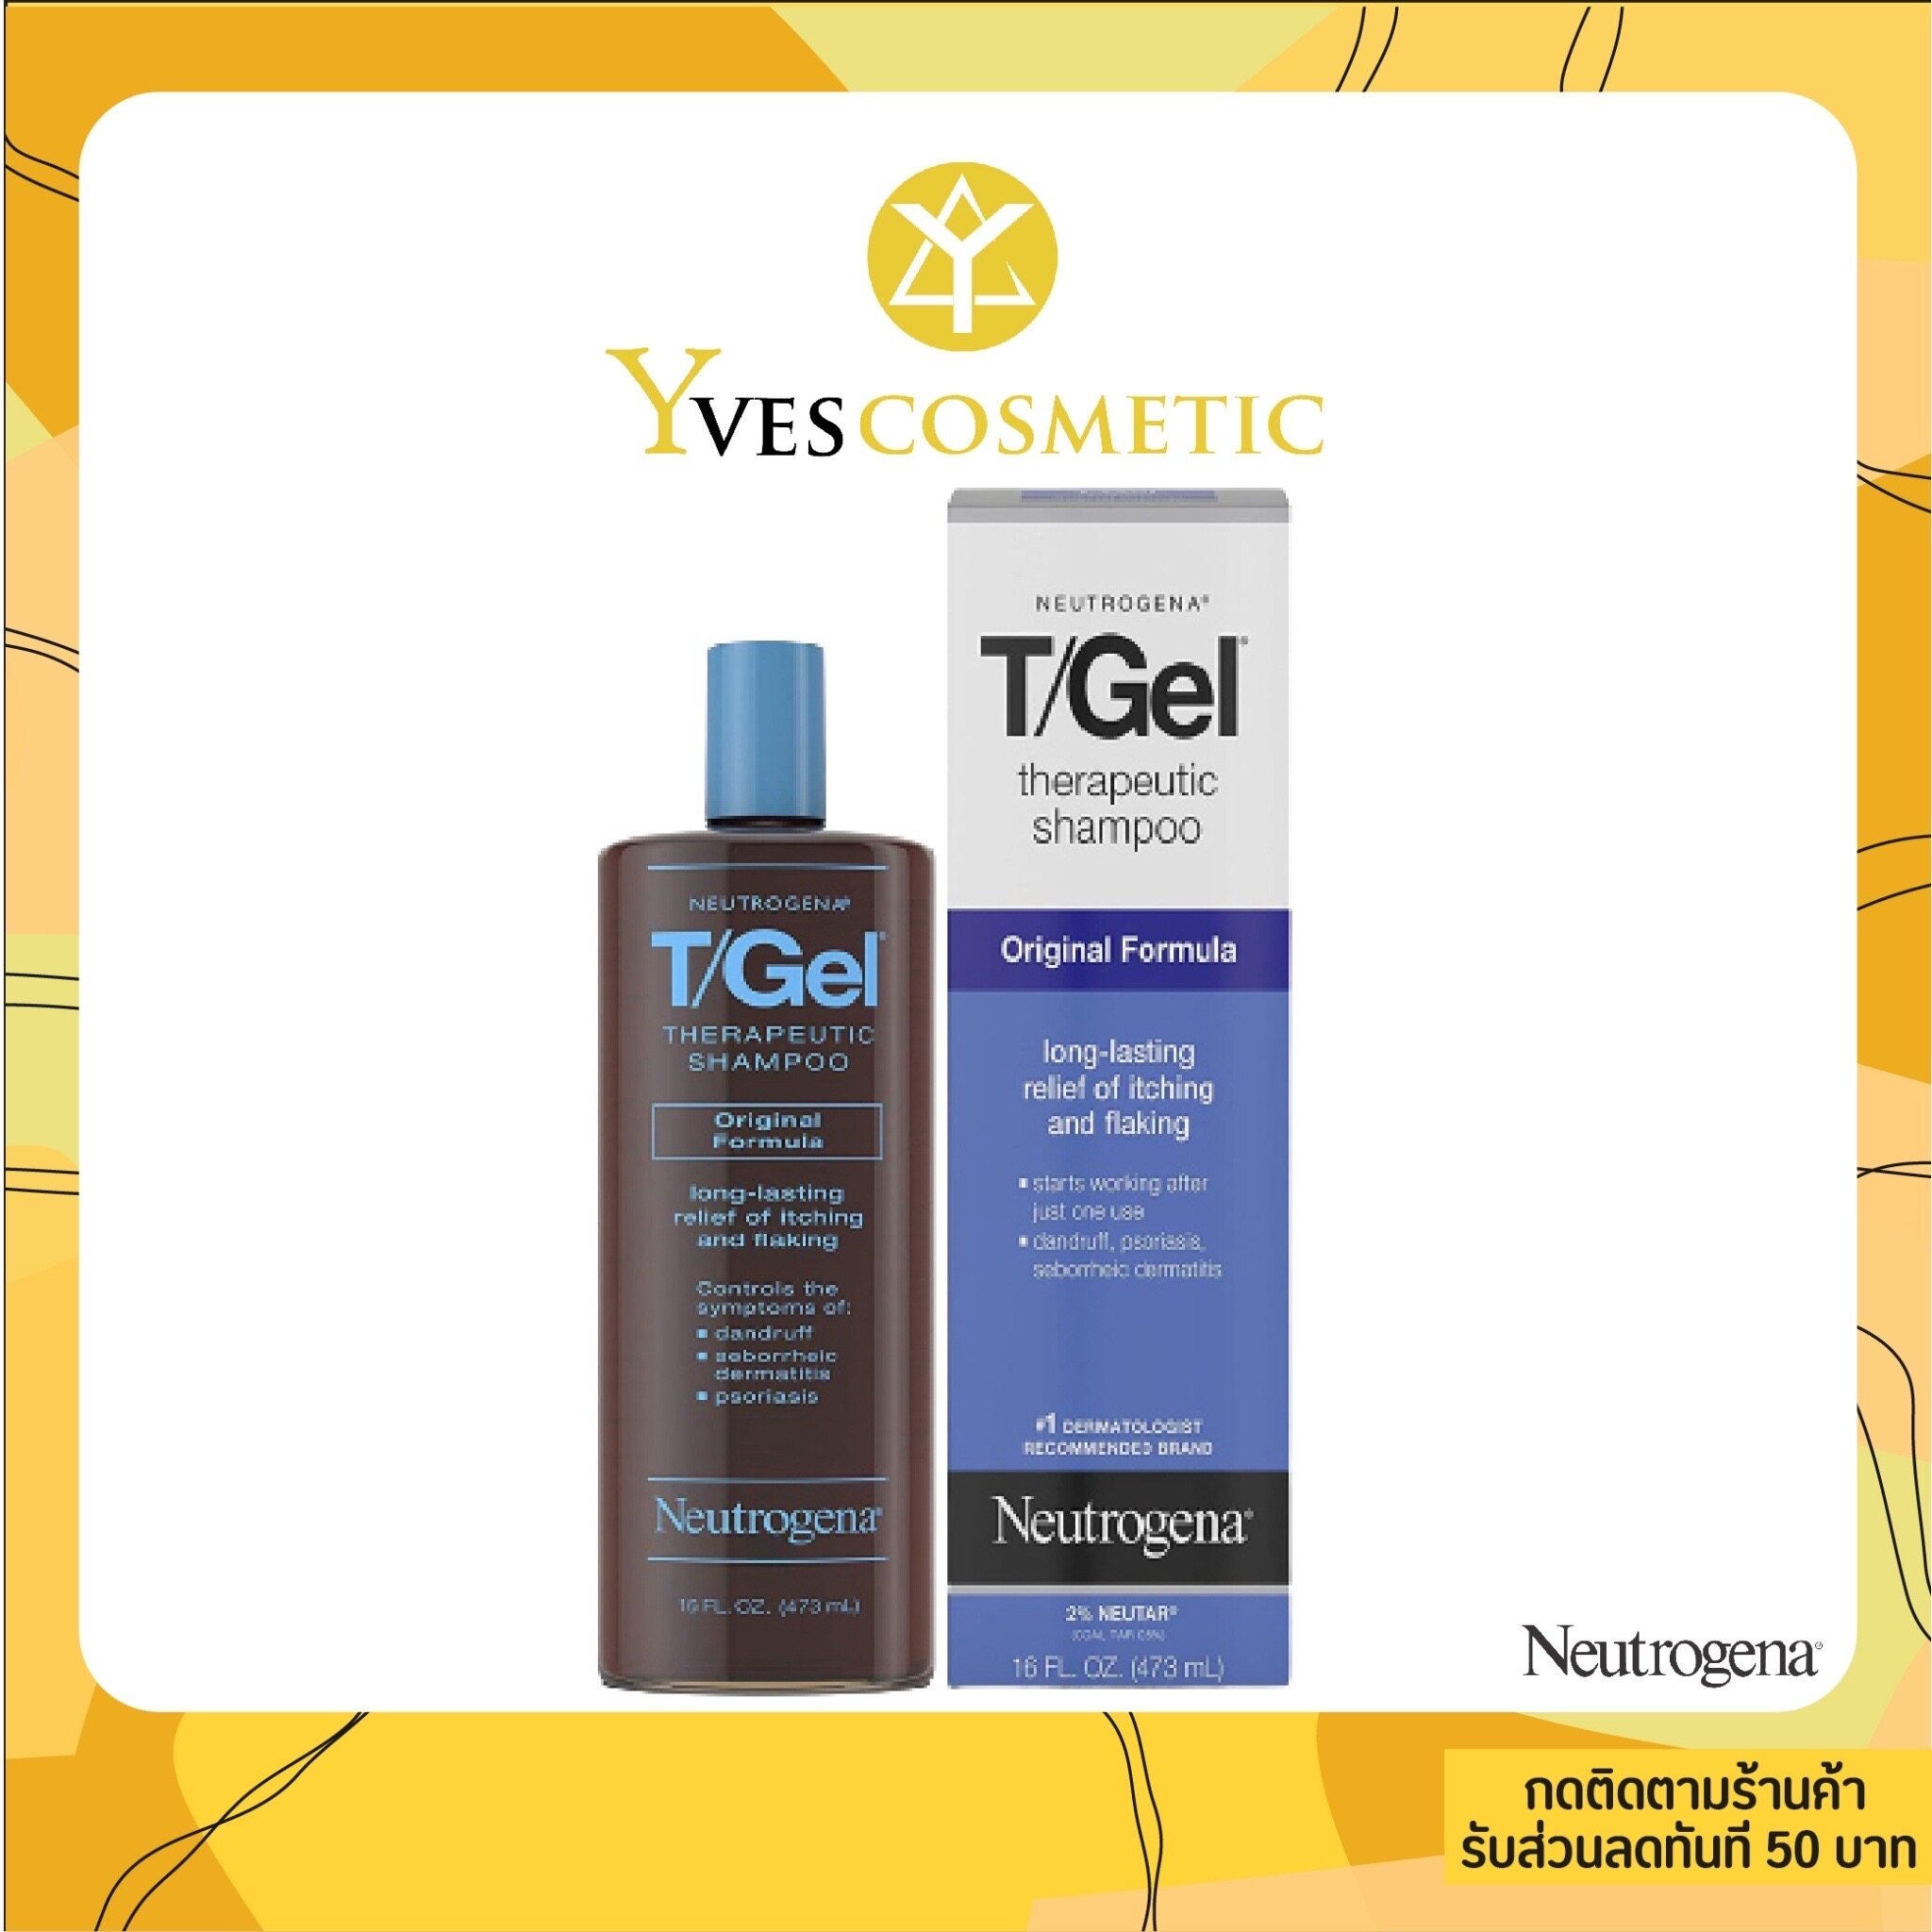 Neutrogena T/Gel Therapeutic Shampoo แชมพู ช่วยขจัดรังแค เชื้อรา บำรุงหนังศีรษะ